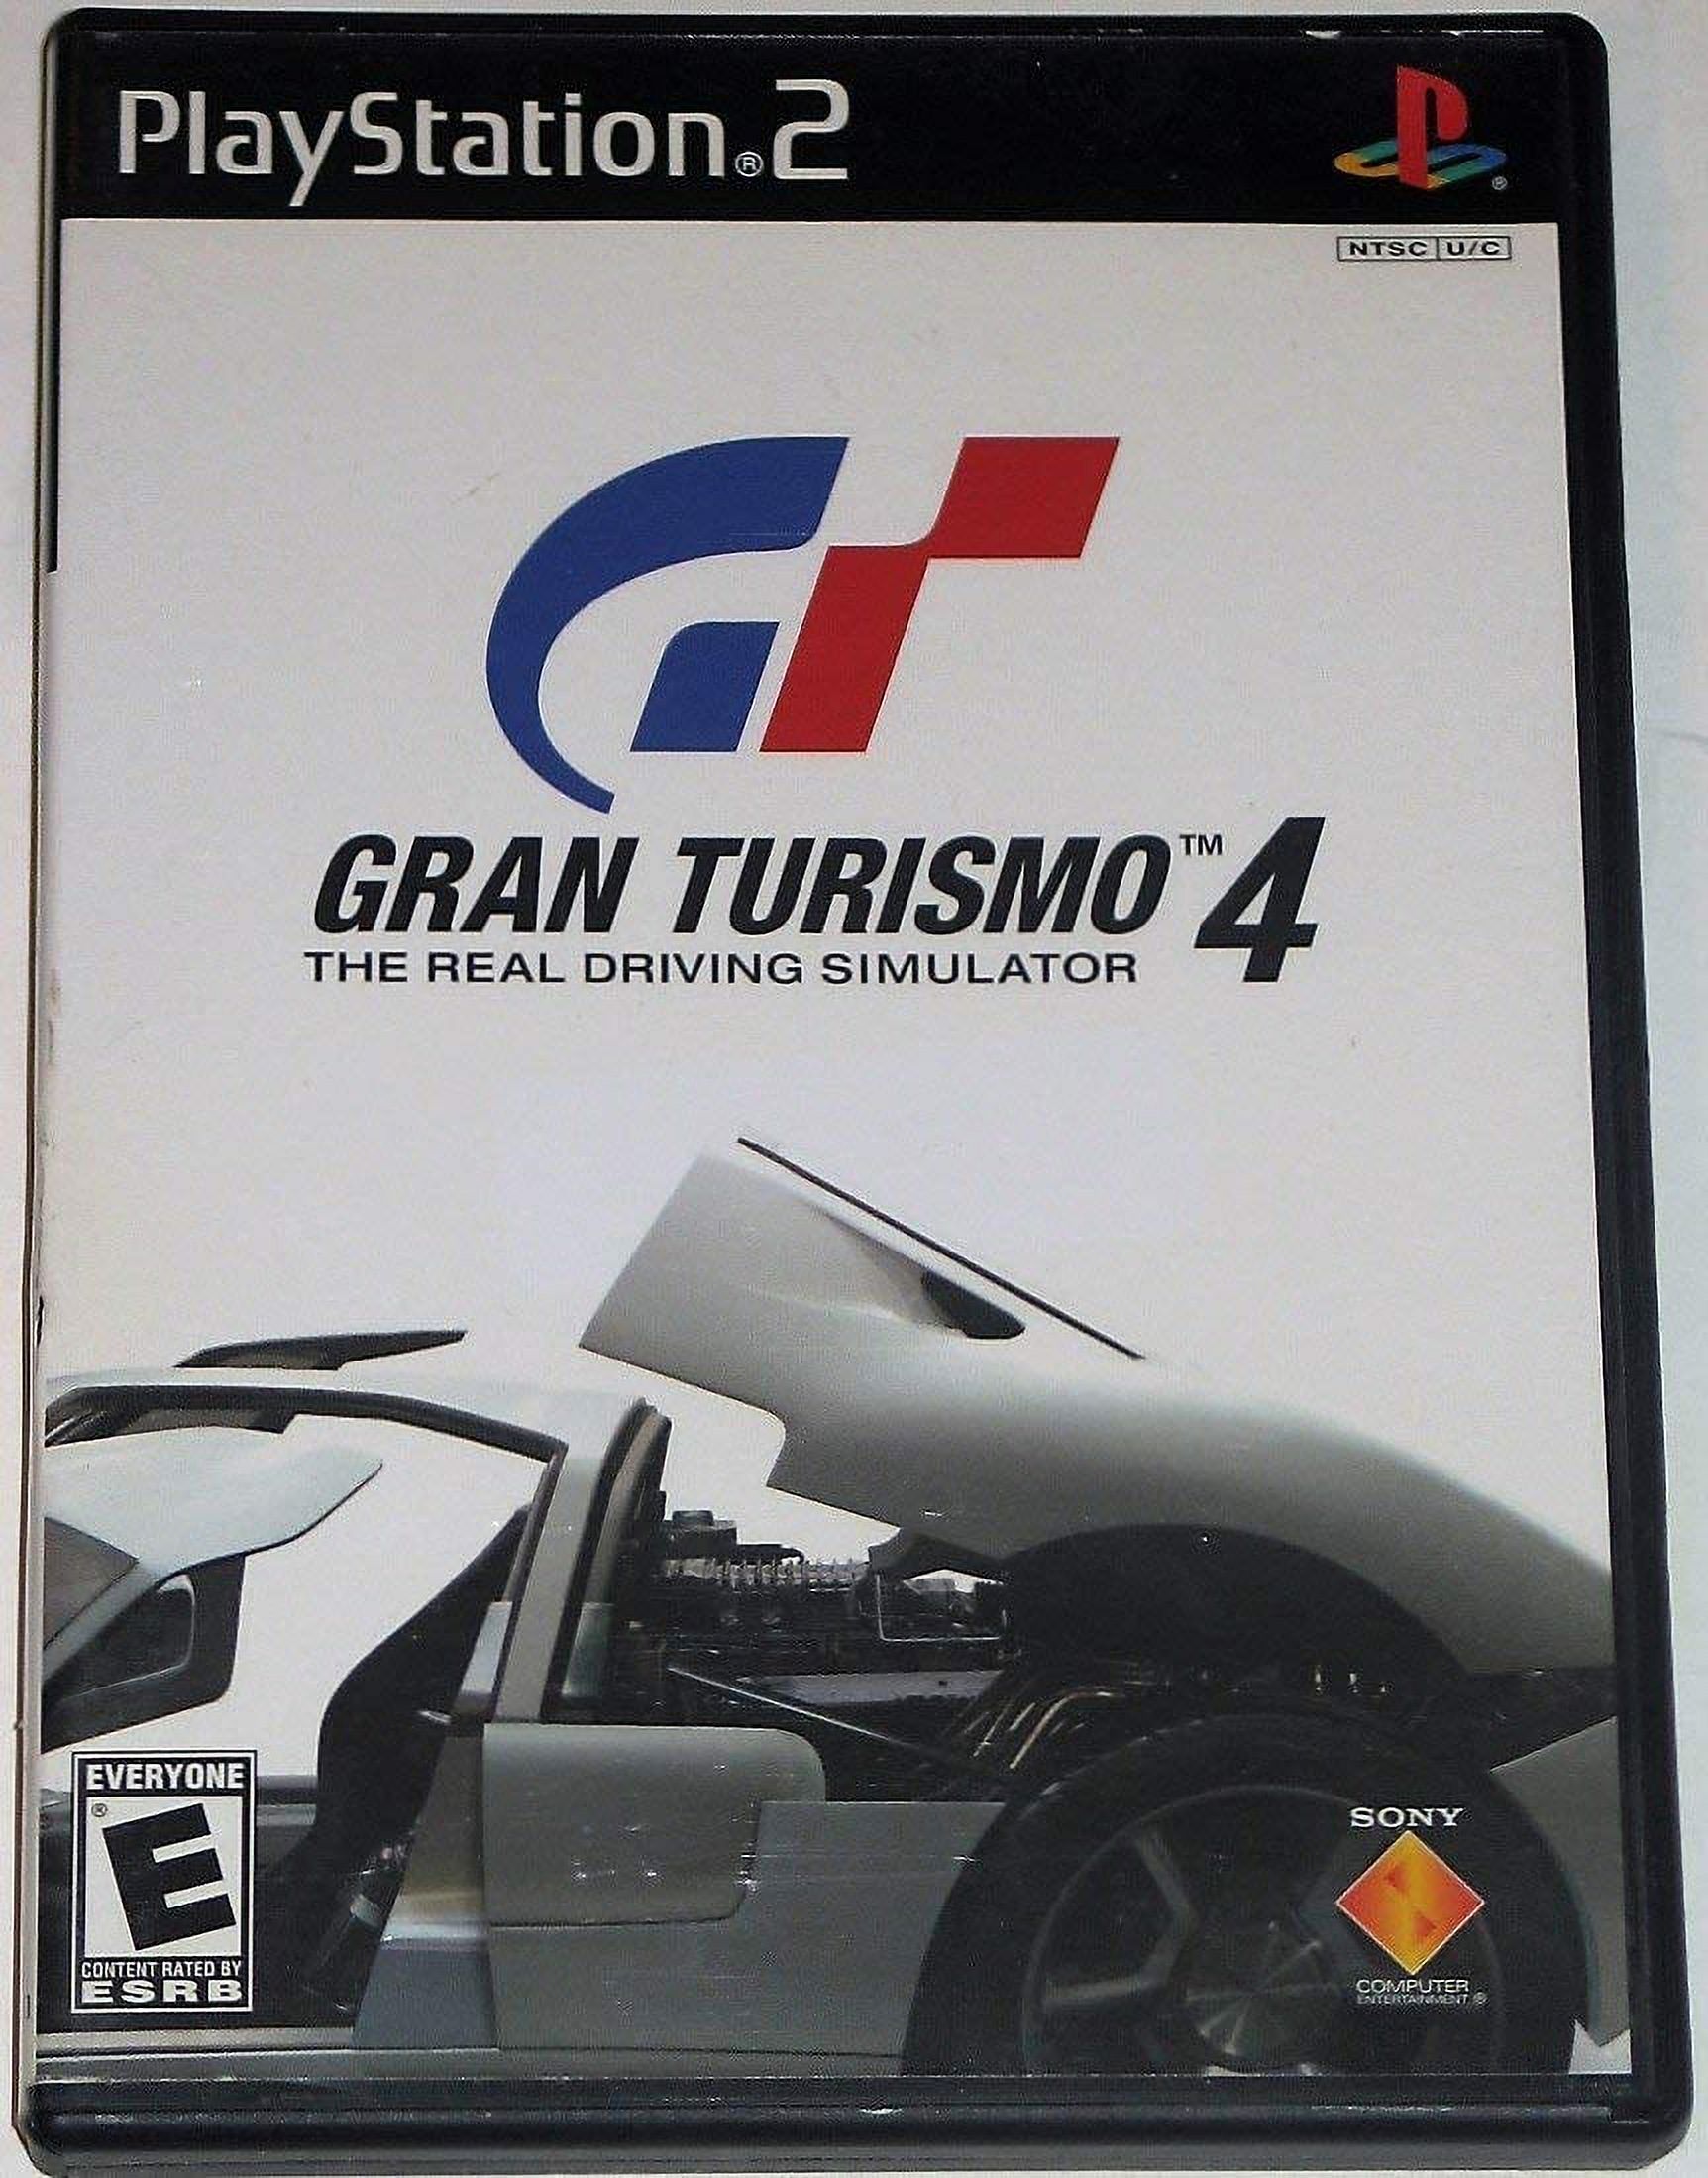 Restored Gran Turismo 4 PS2 Game (Refurbished)